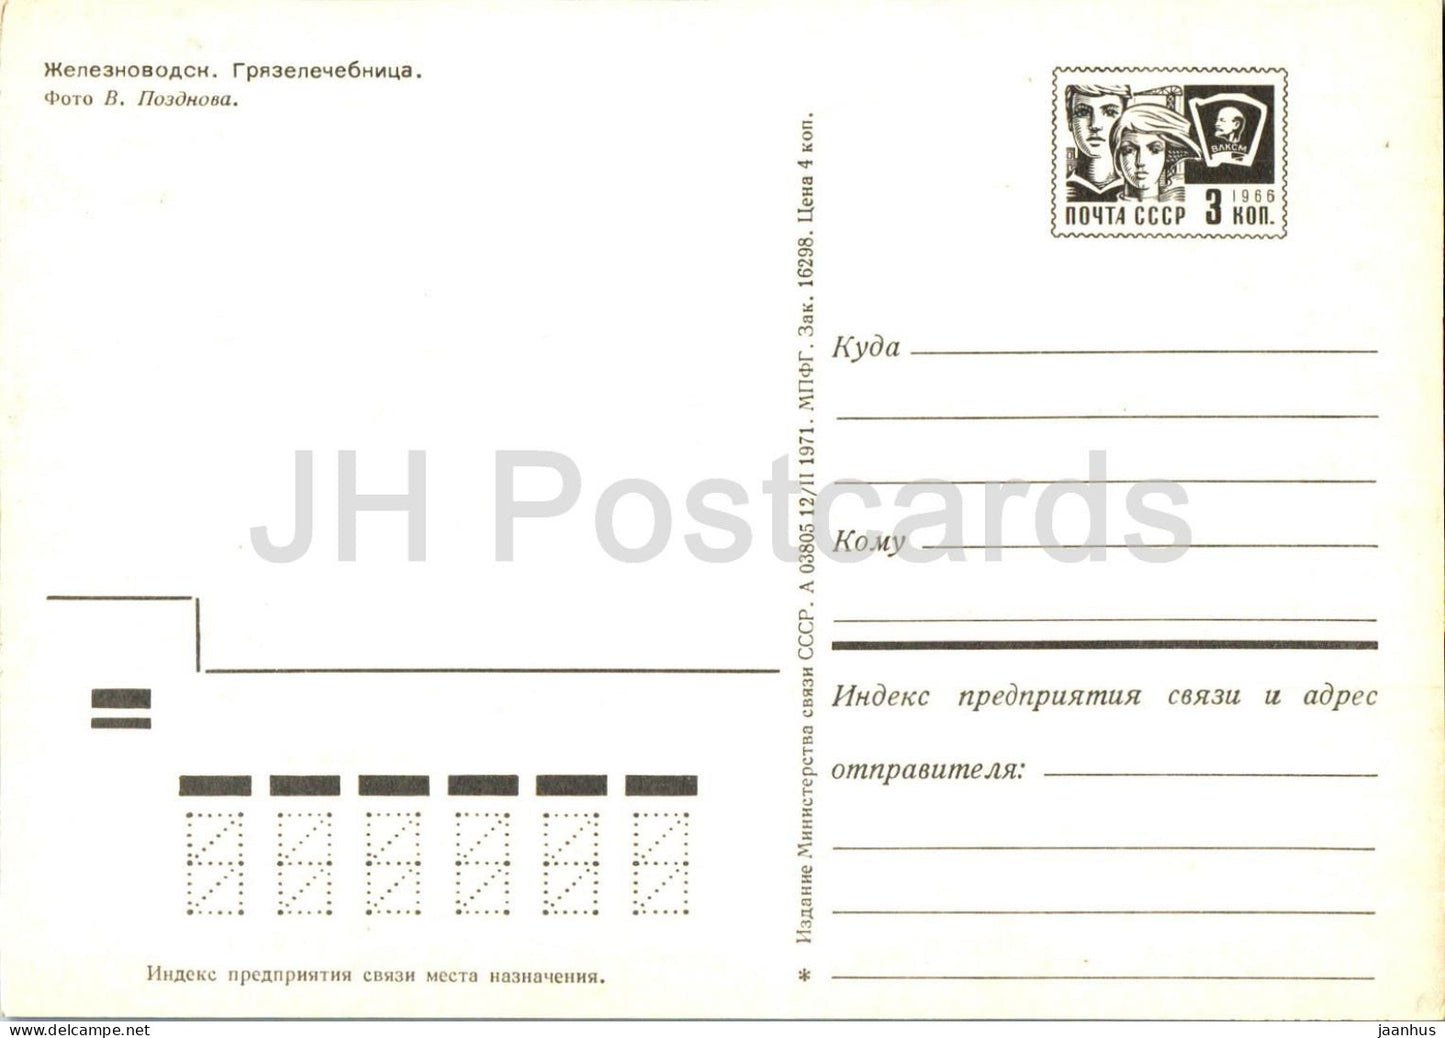 Jeleznovodsk - Bain de boue - entier postal - 1971 - Russie URSS - inutilisé 